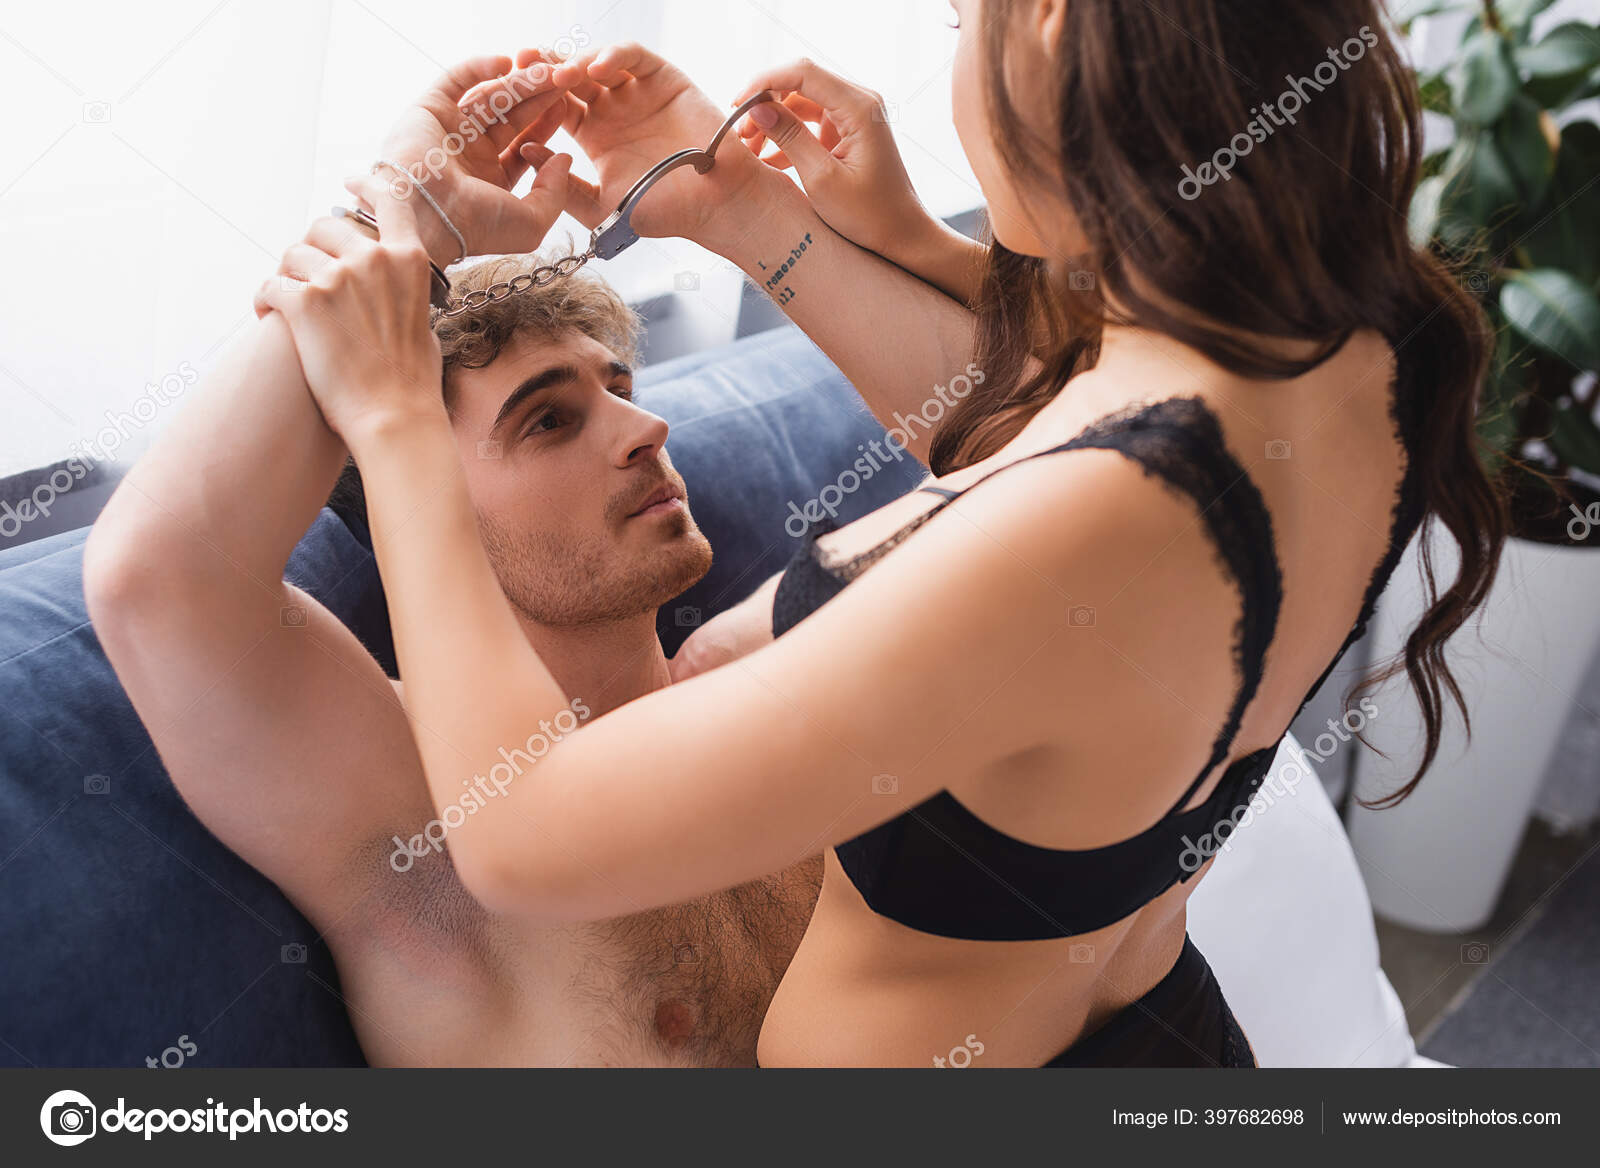 Dominant Woman Touching Handcuffed Tattooed Man Bedroom Stock Photo by ©VitalikRadko 397682698